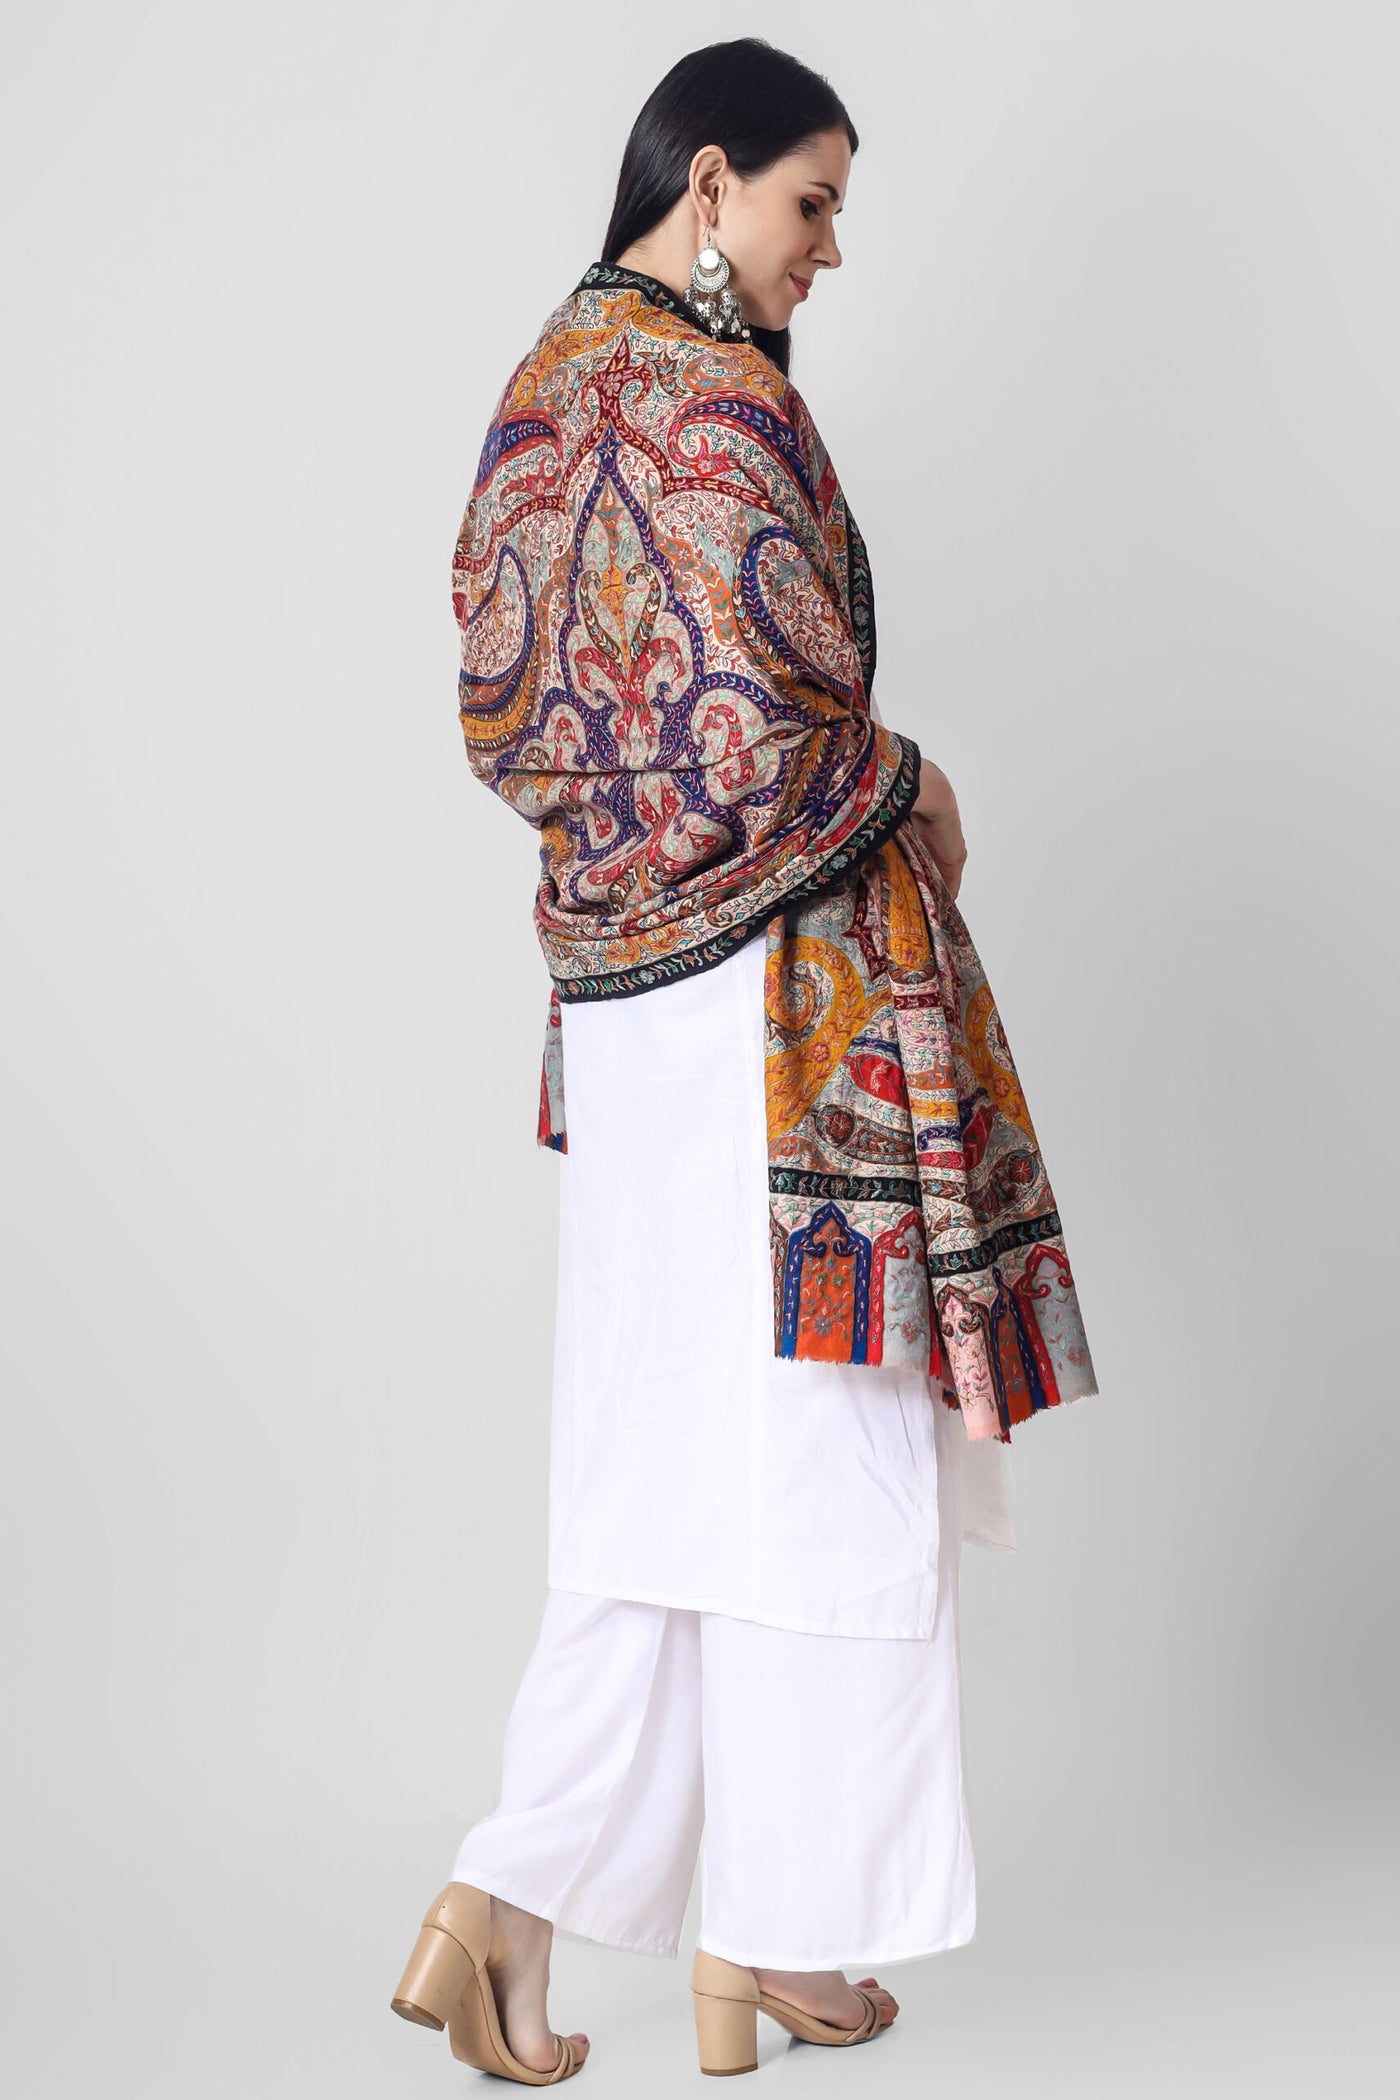 Pashmina shaheena Kalamkari shawl